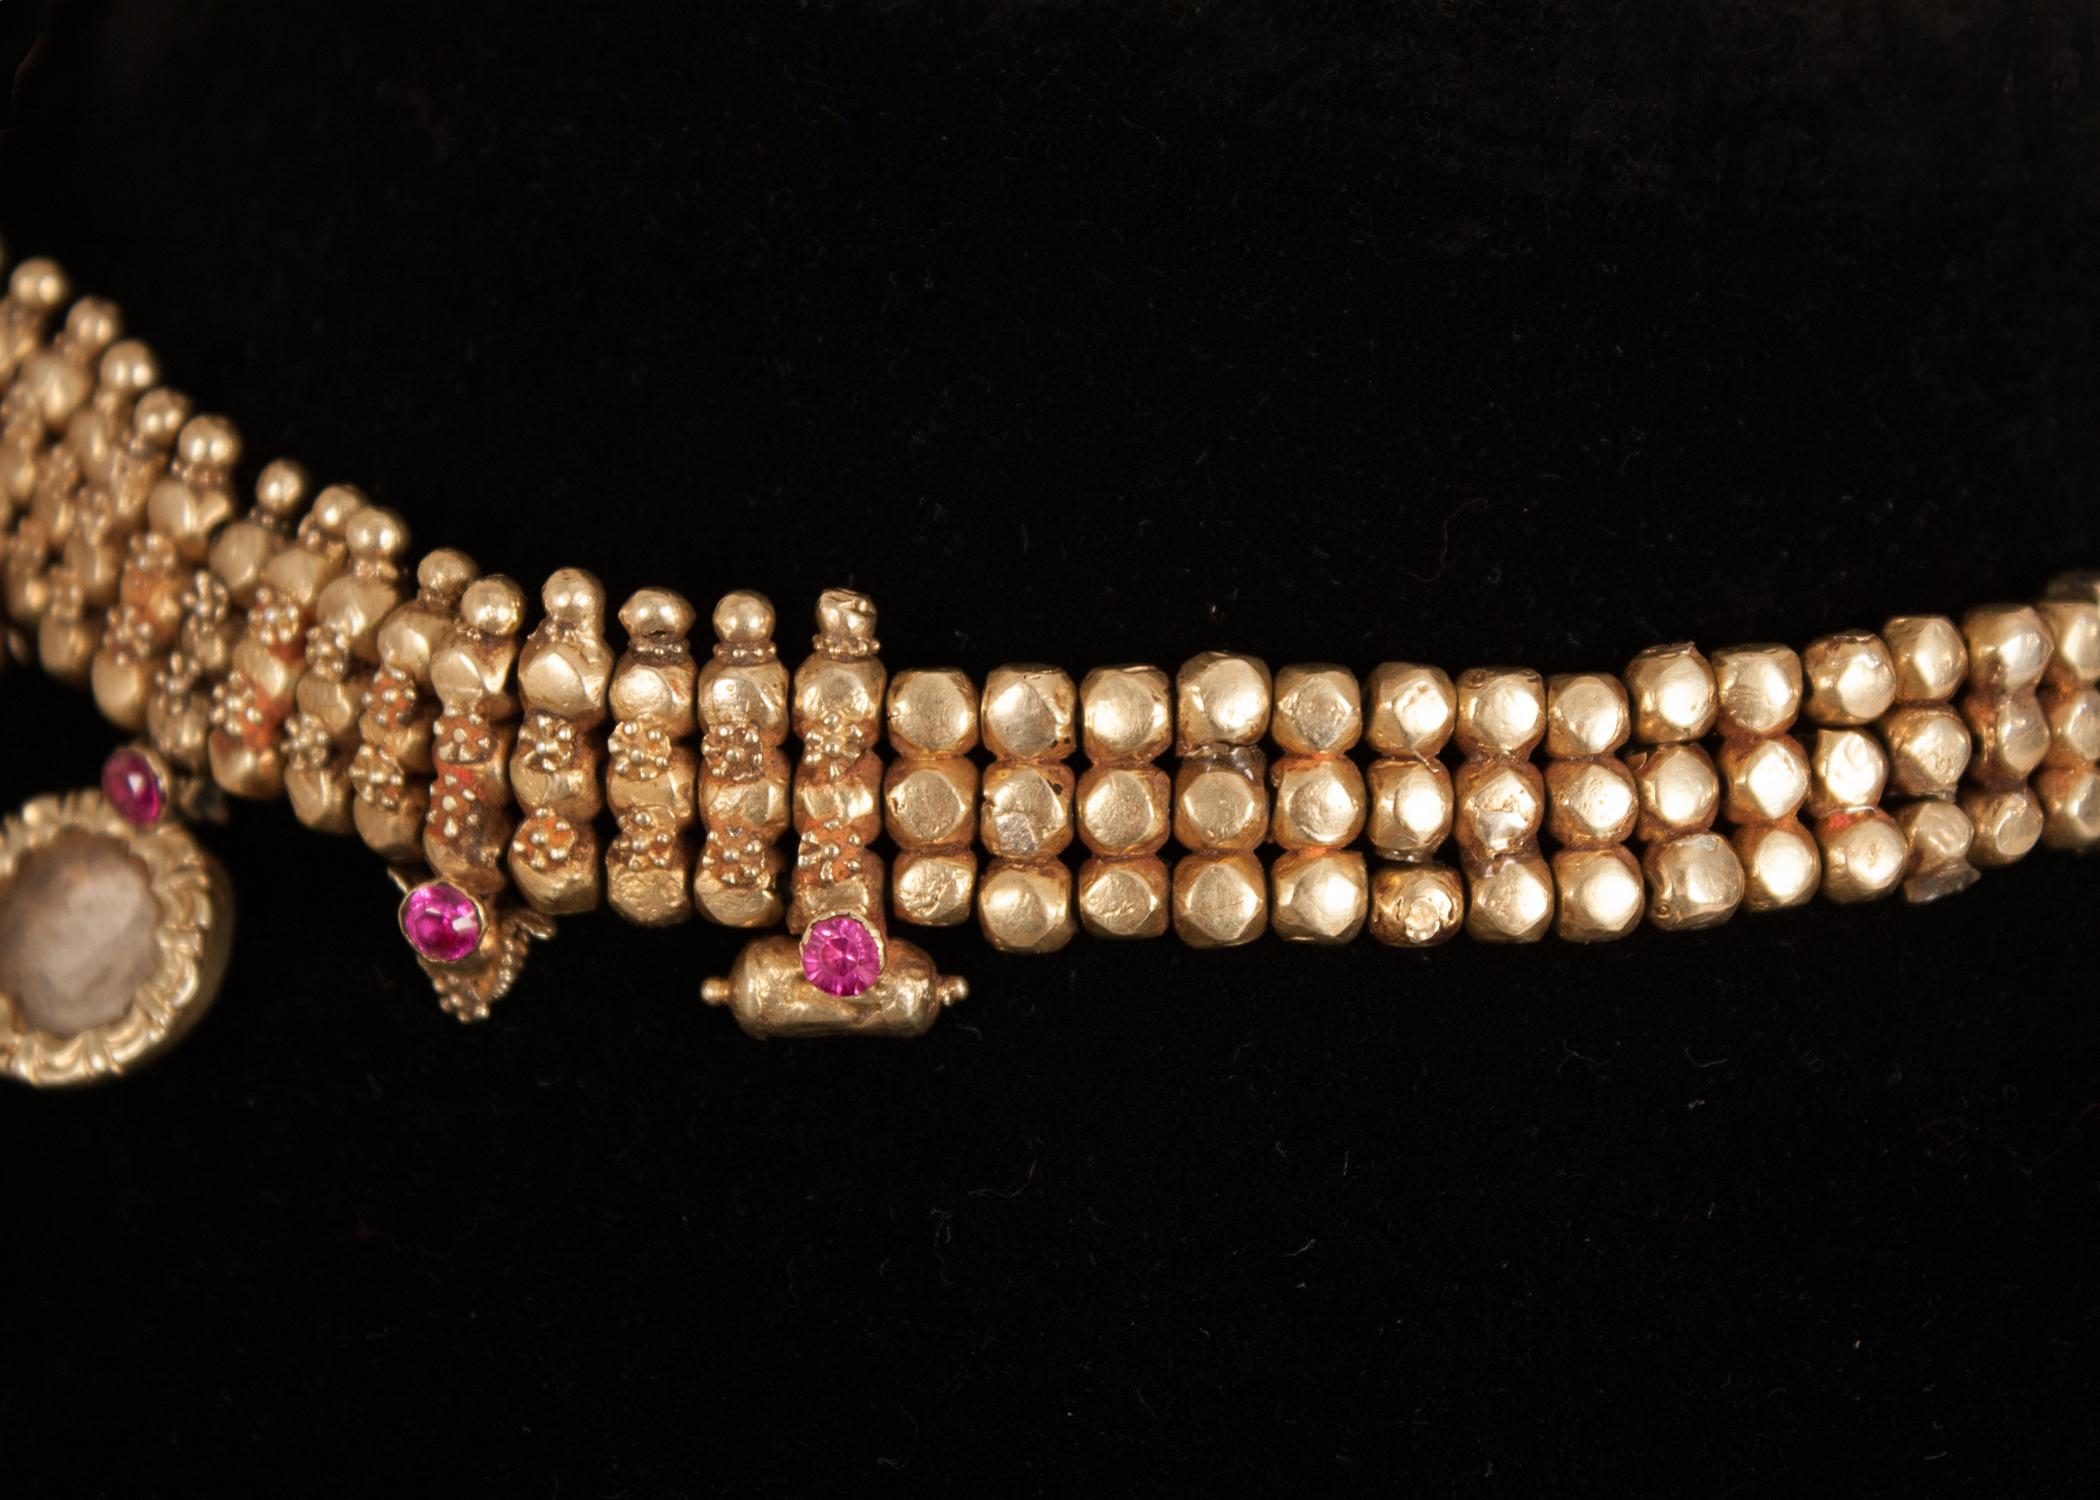 22 carat gold choker necklace